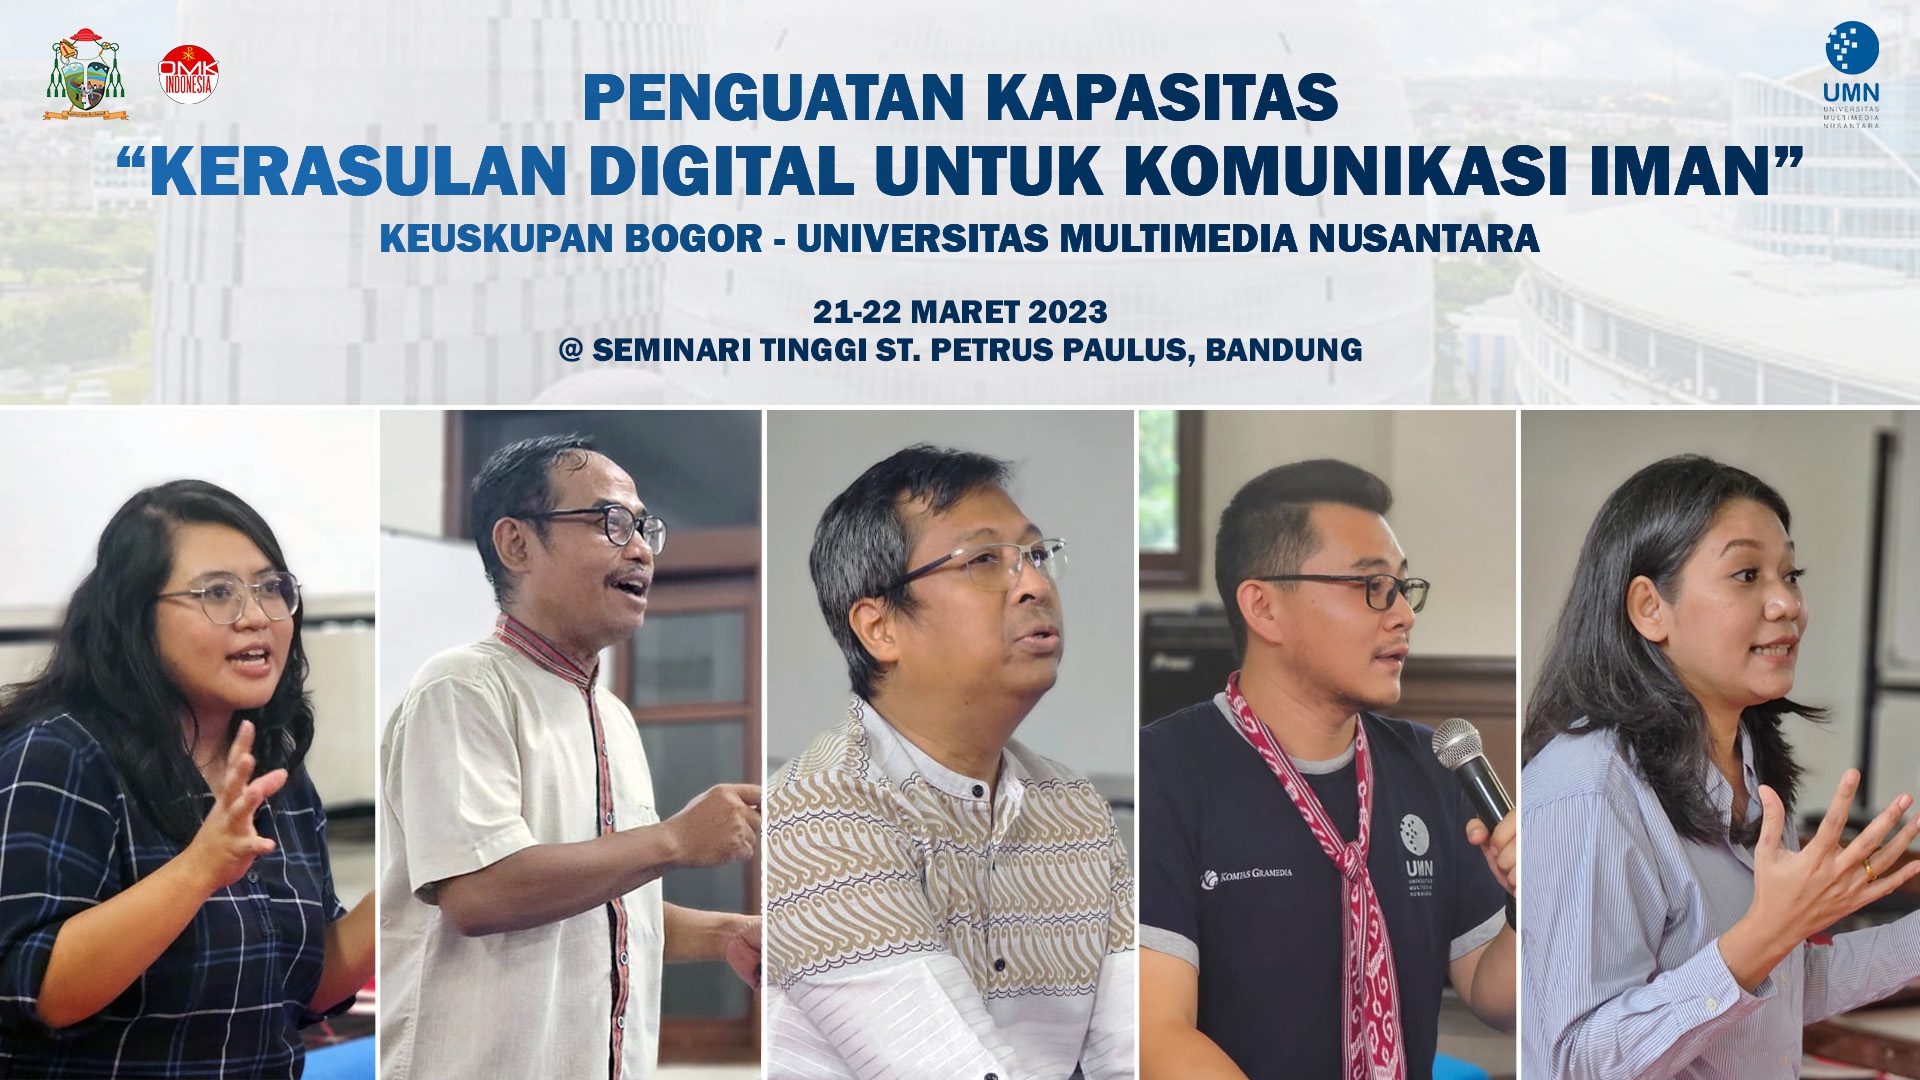 Asah Keterampilan Media Digital Para Frater Keuskupan Bogor, Tim Dosen UMN Adakan Penguatan Kapasitas di Seminari Tinggi St. Petrus Paulus, Bandung